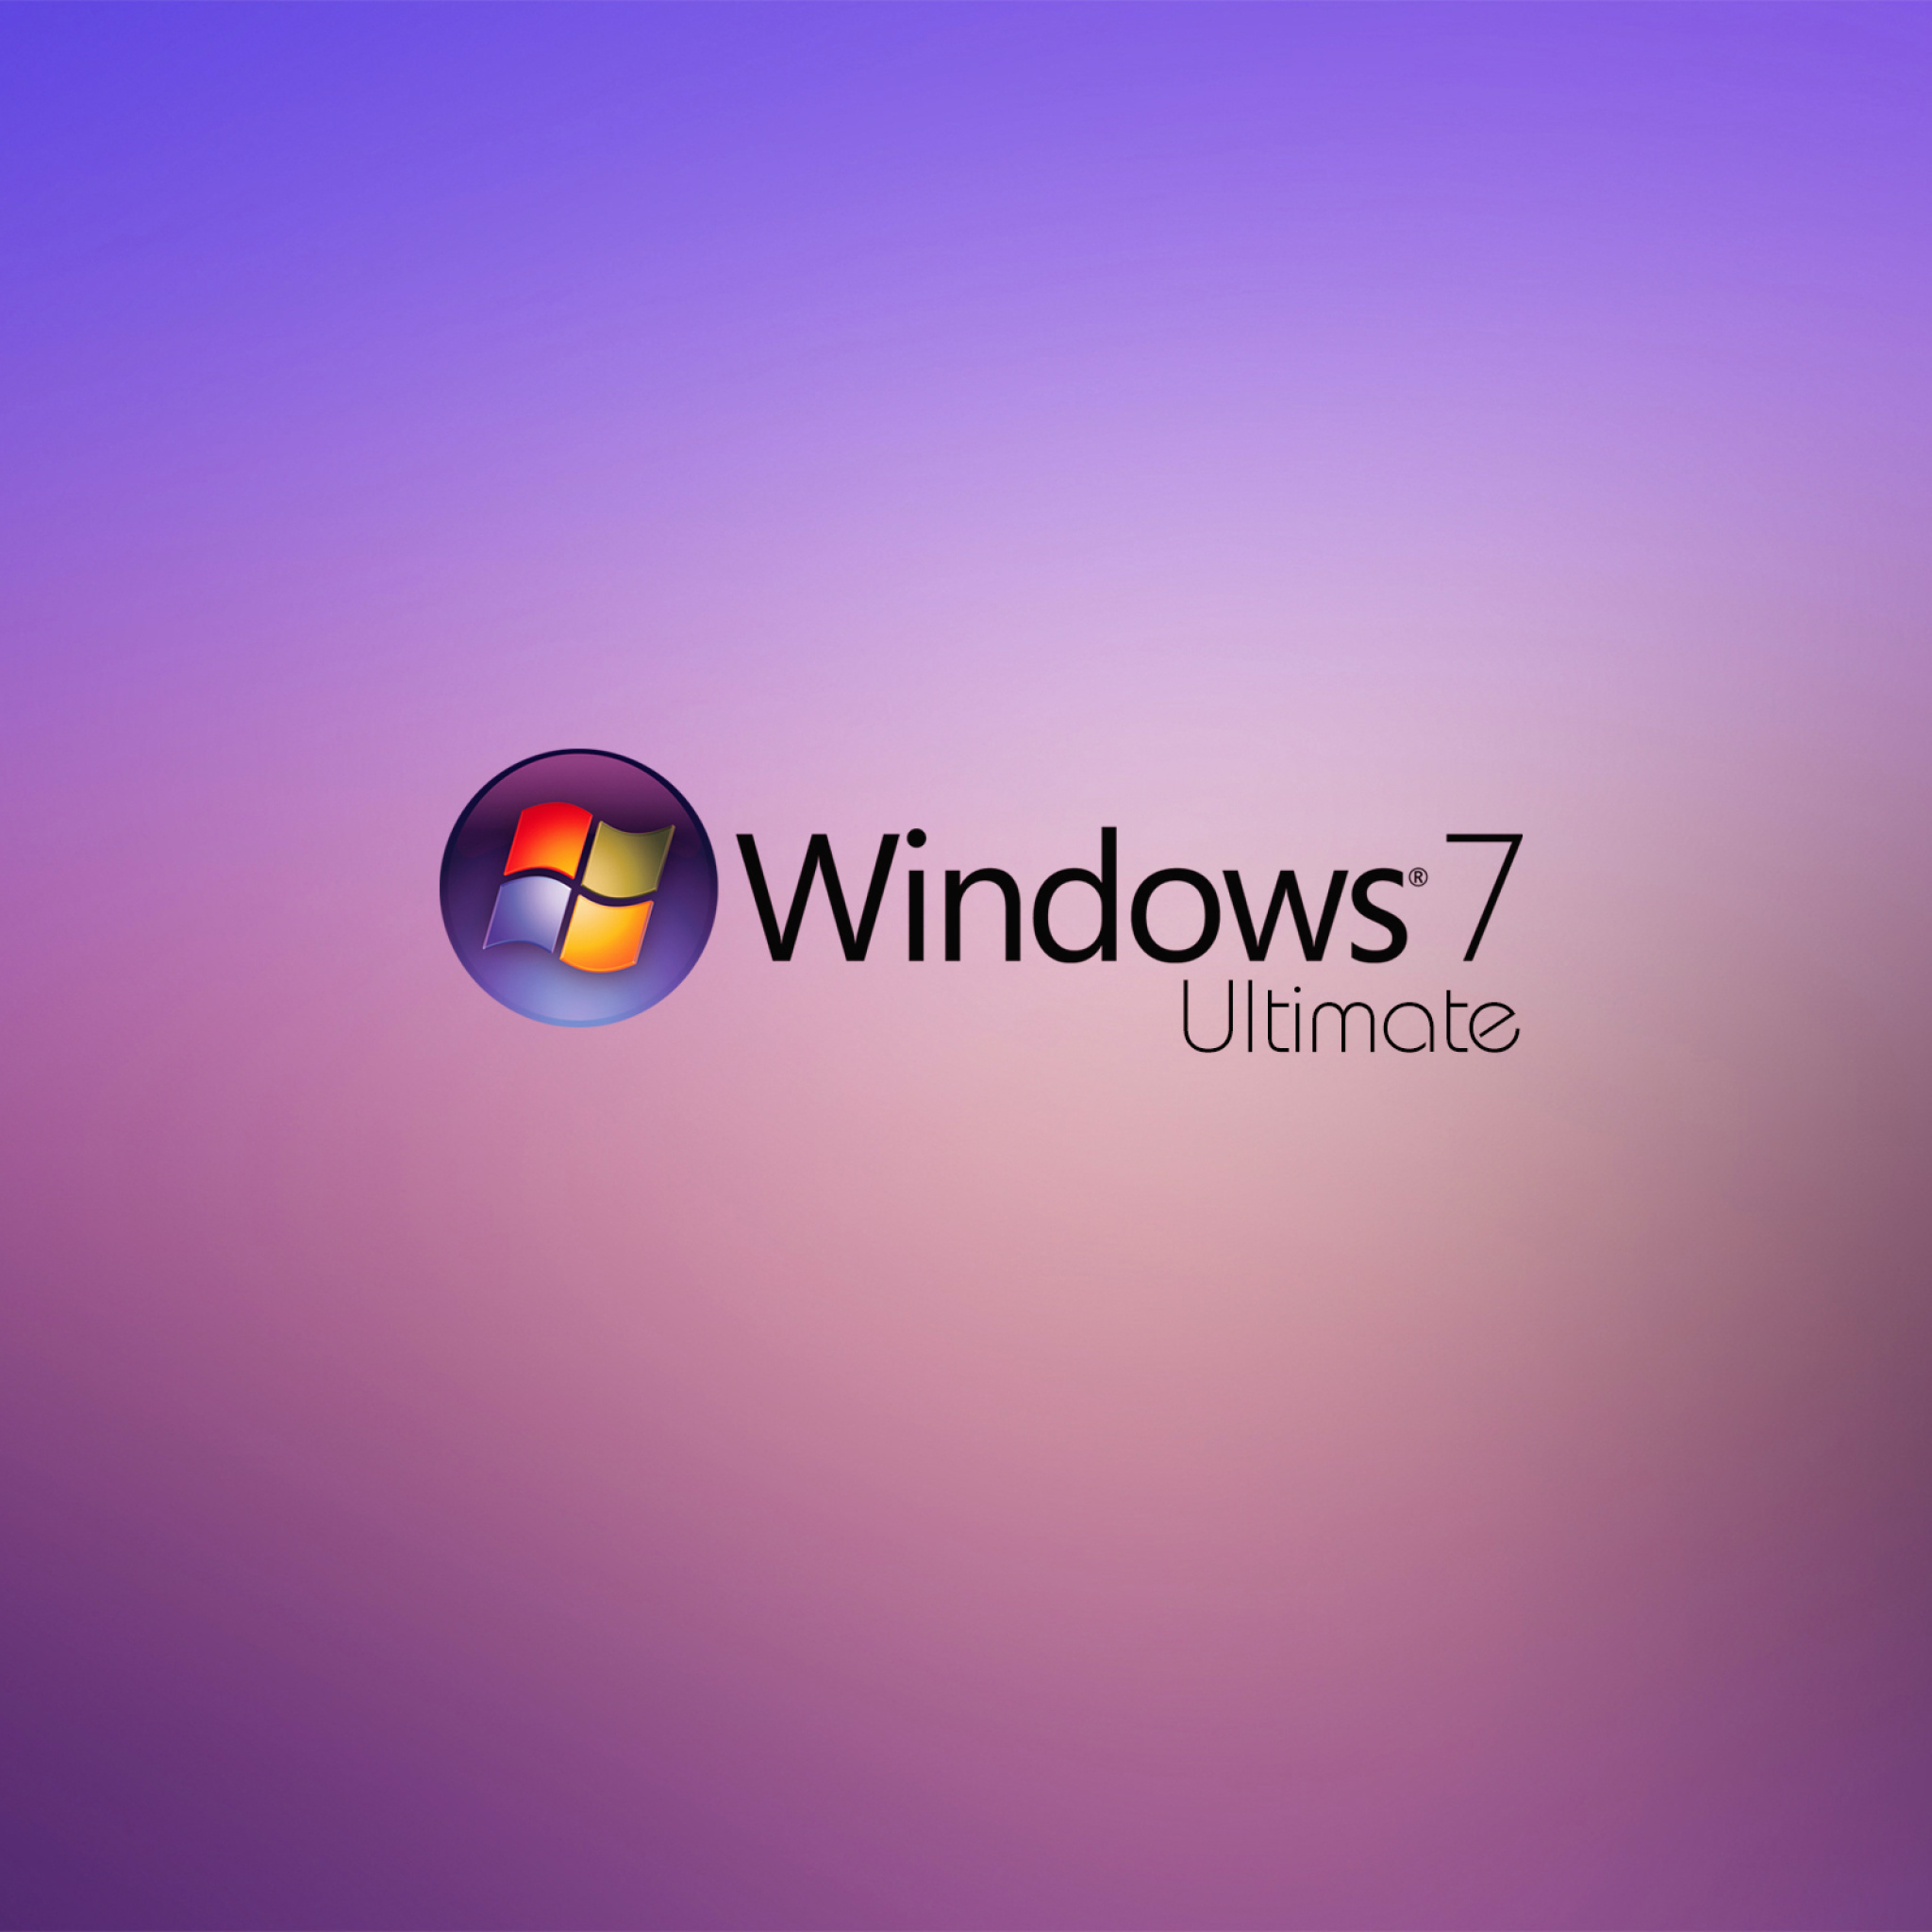 Das Windows 7 Ultimate Wallpaper 2048x2048